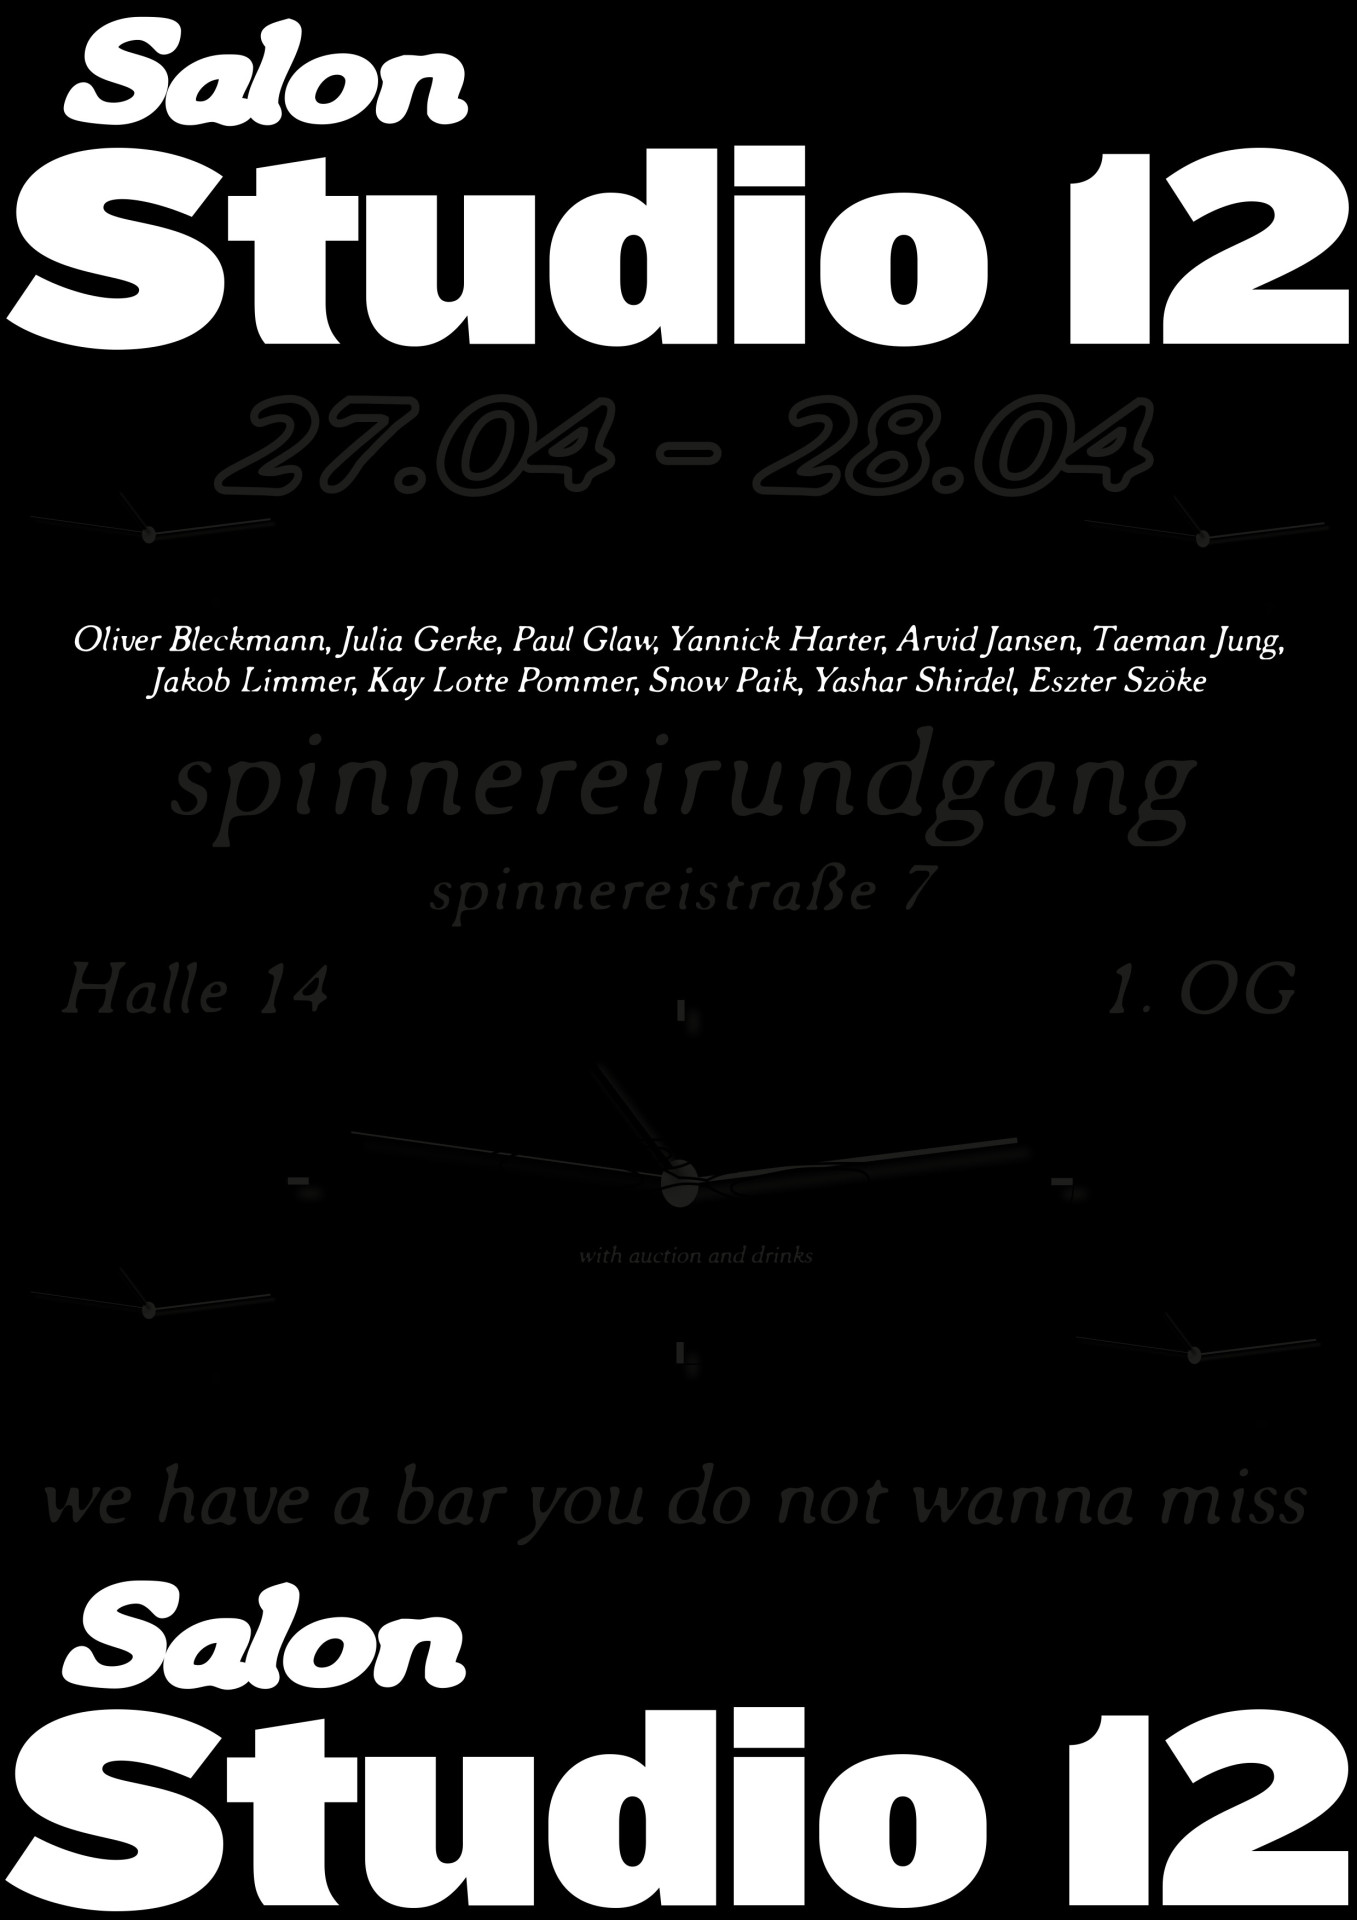 Studio12 Salon